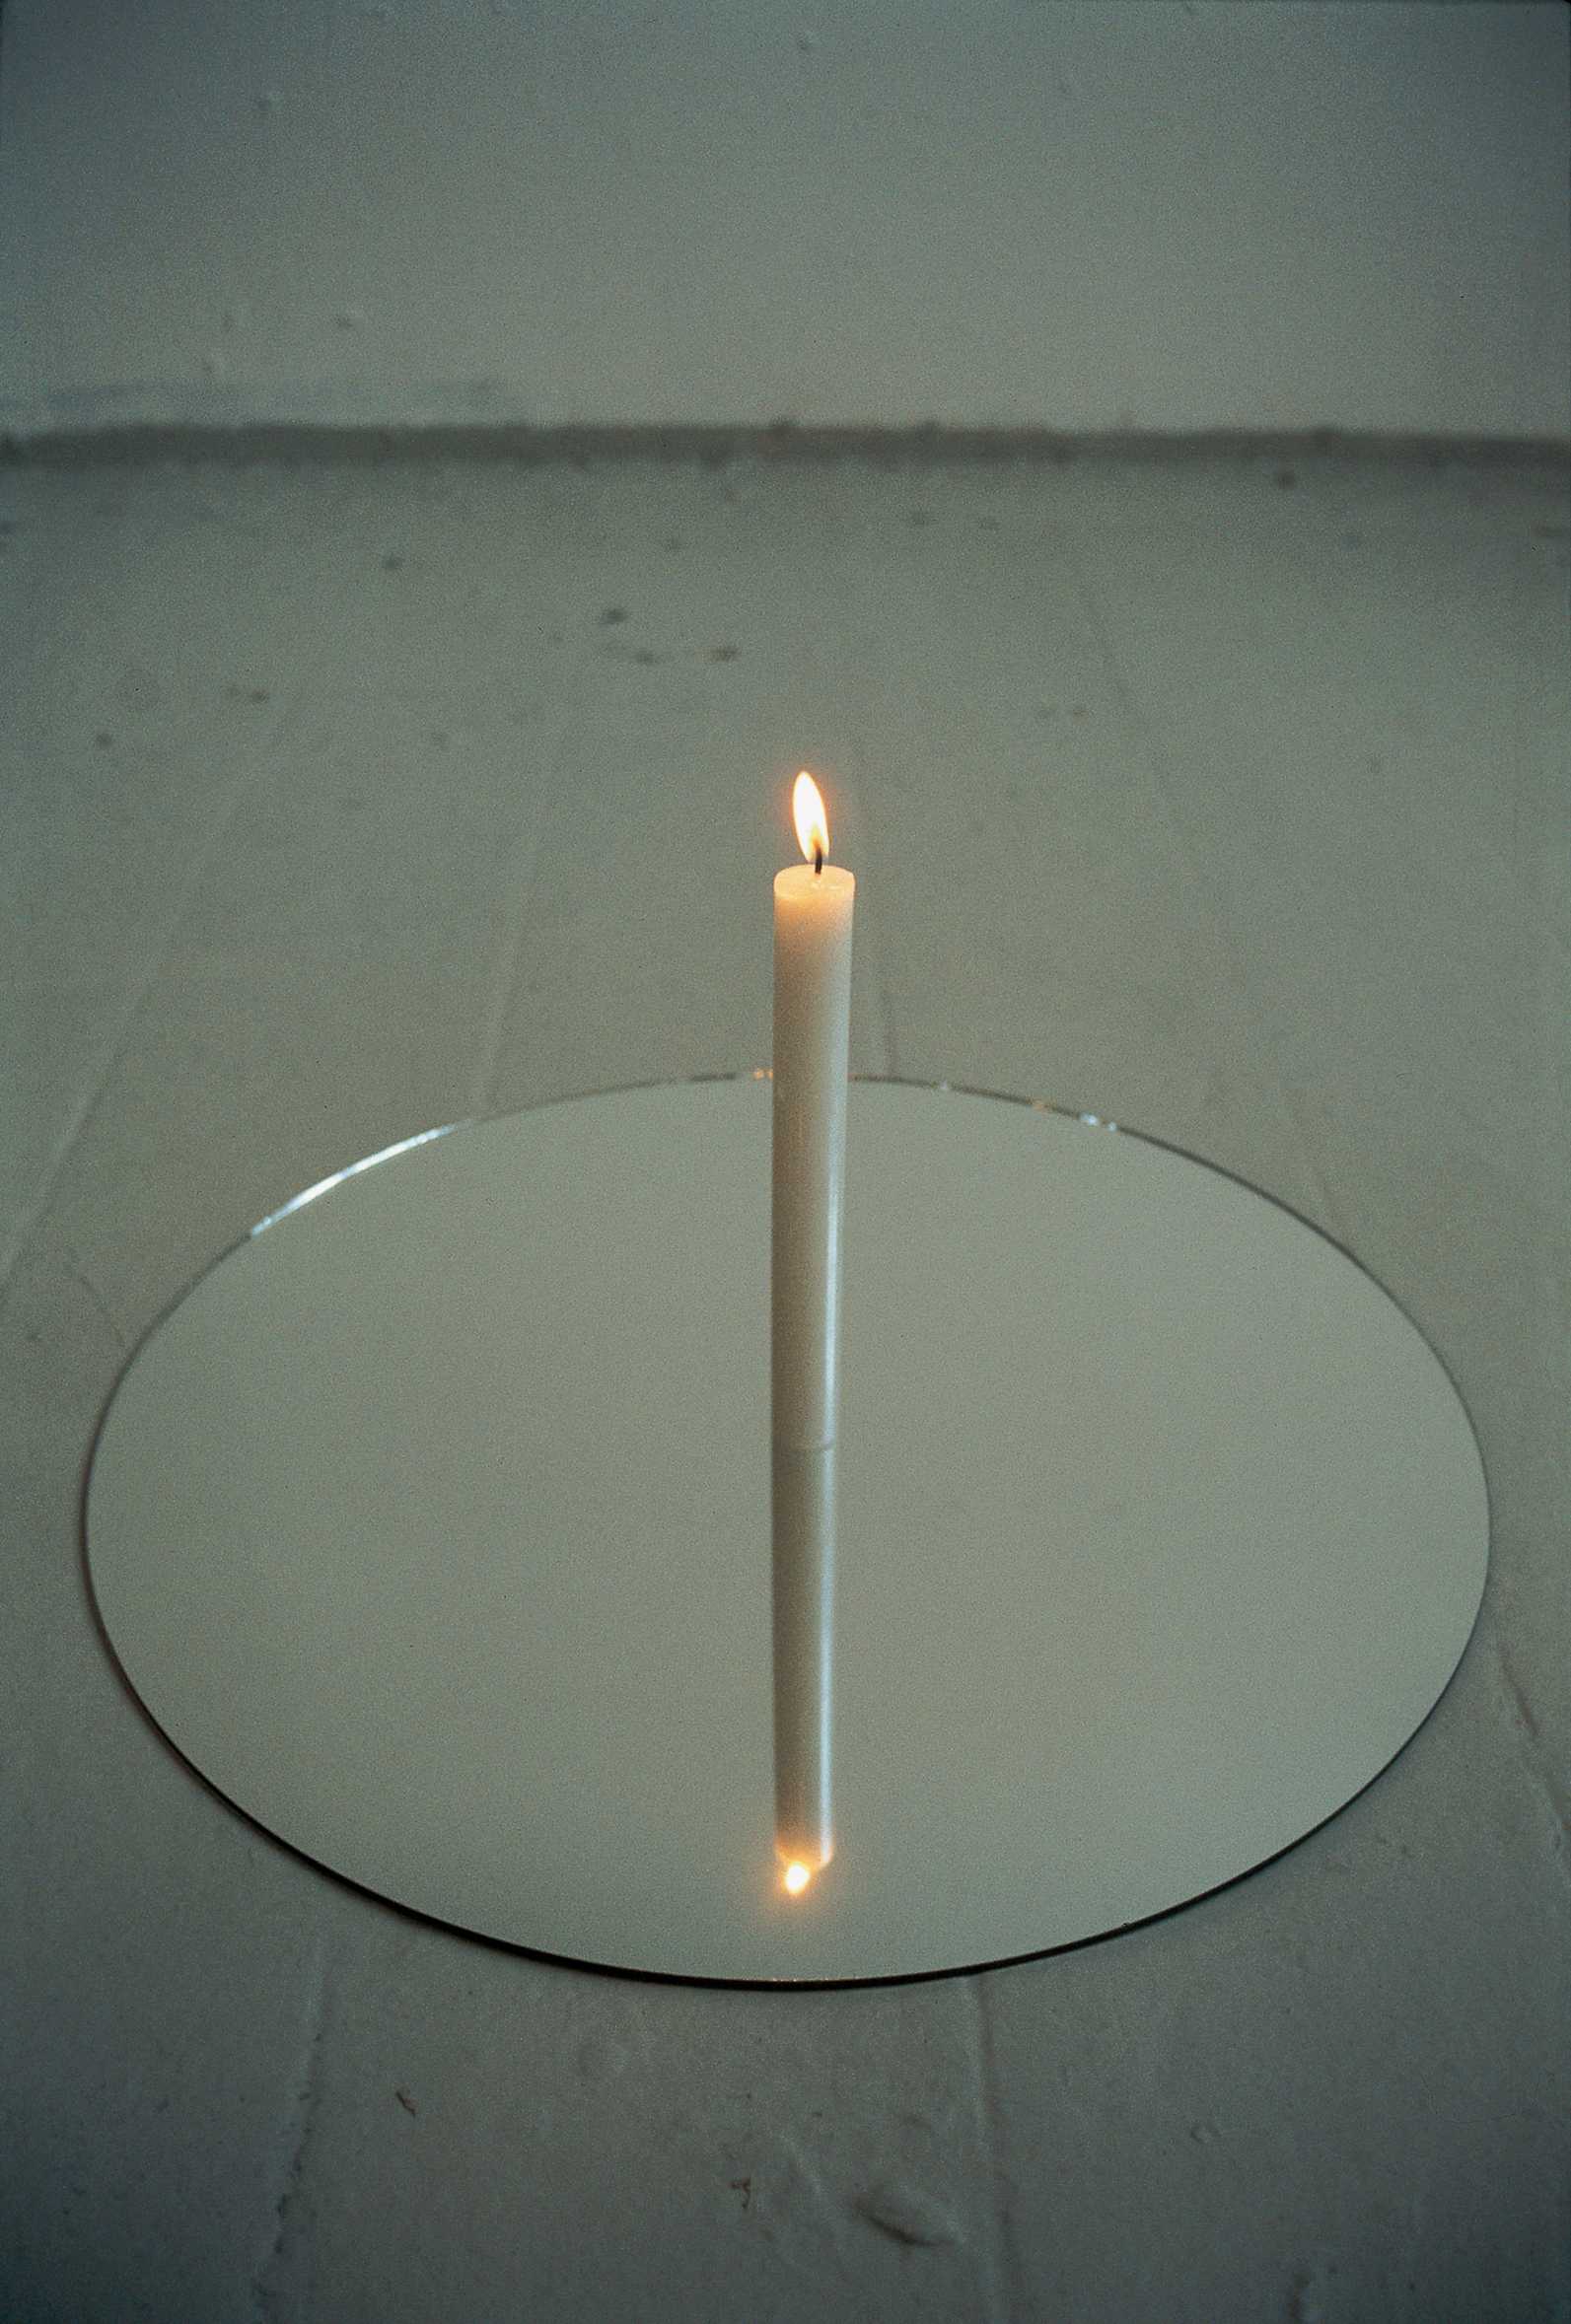 Olafur Eliasson, Exhibition, Tate Modern, London: 11 July 2019 - 5 January 2020